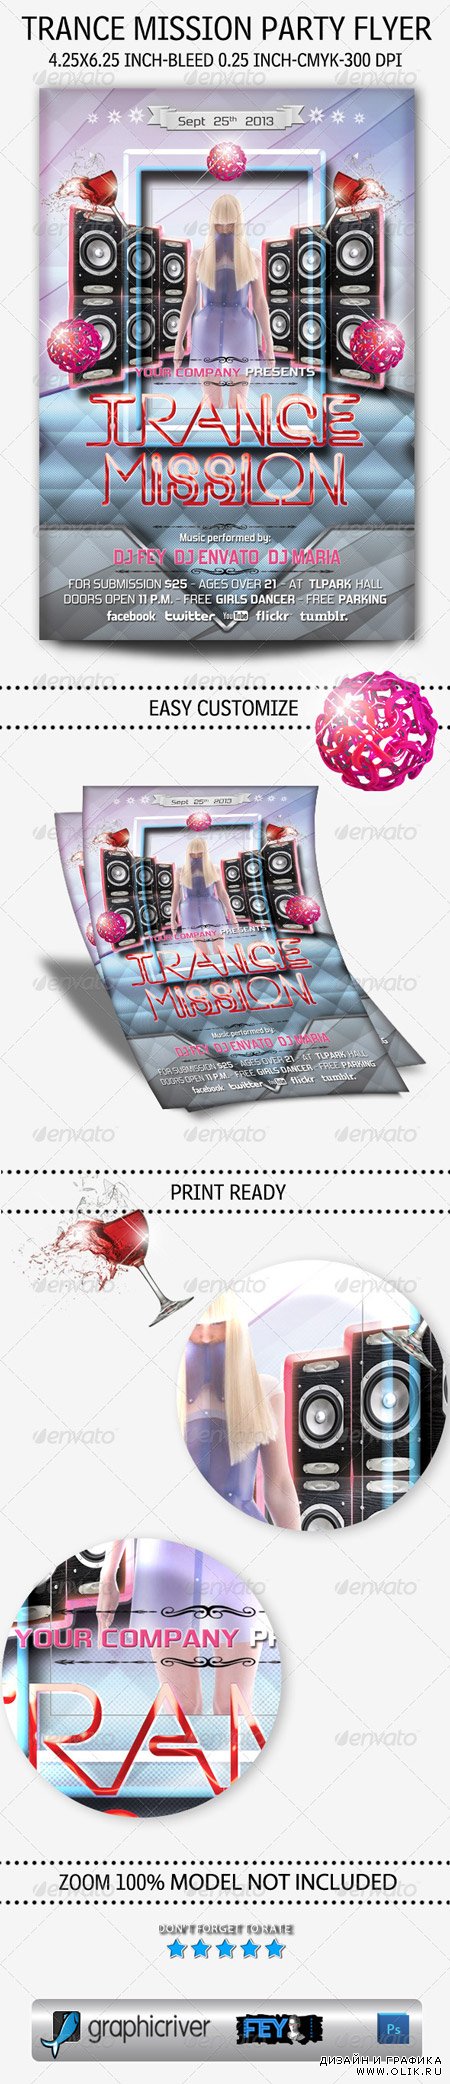 PSD - Trance Mission Party Flyer